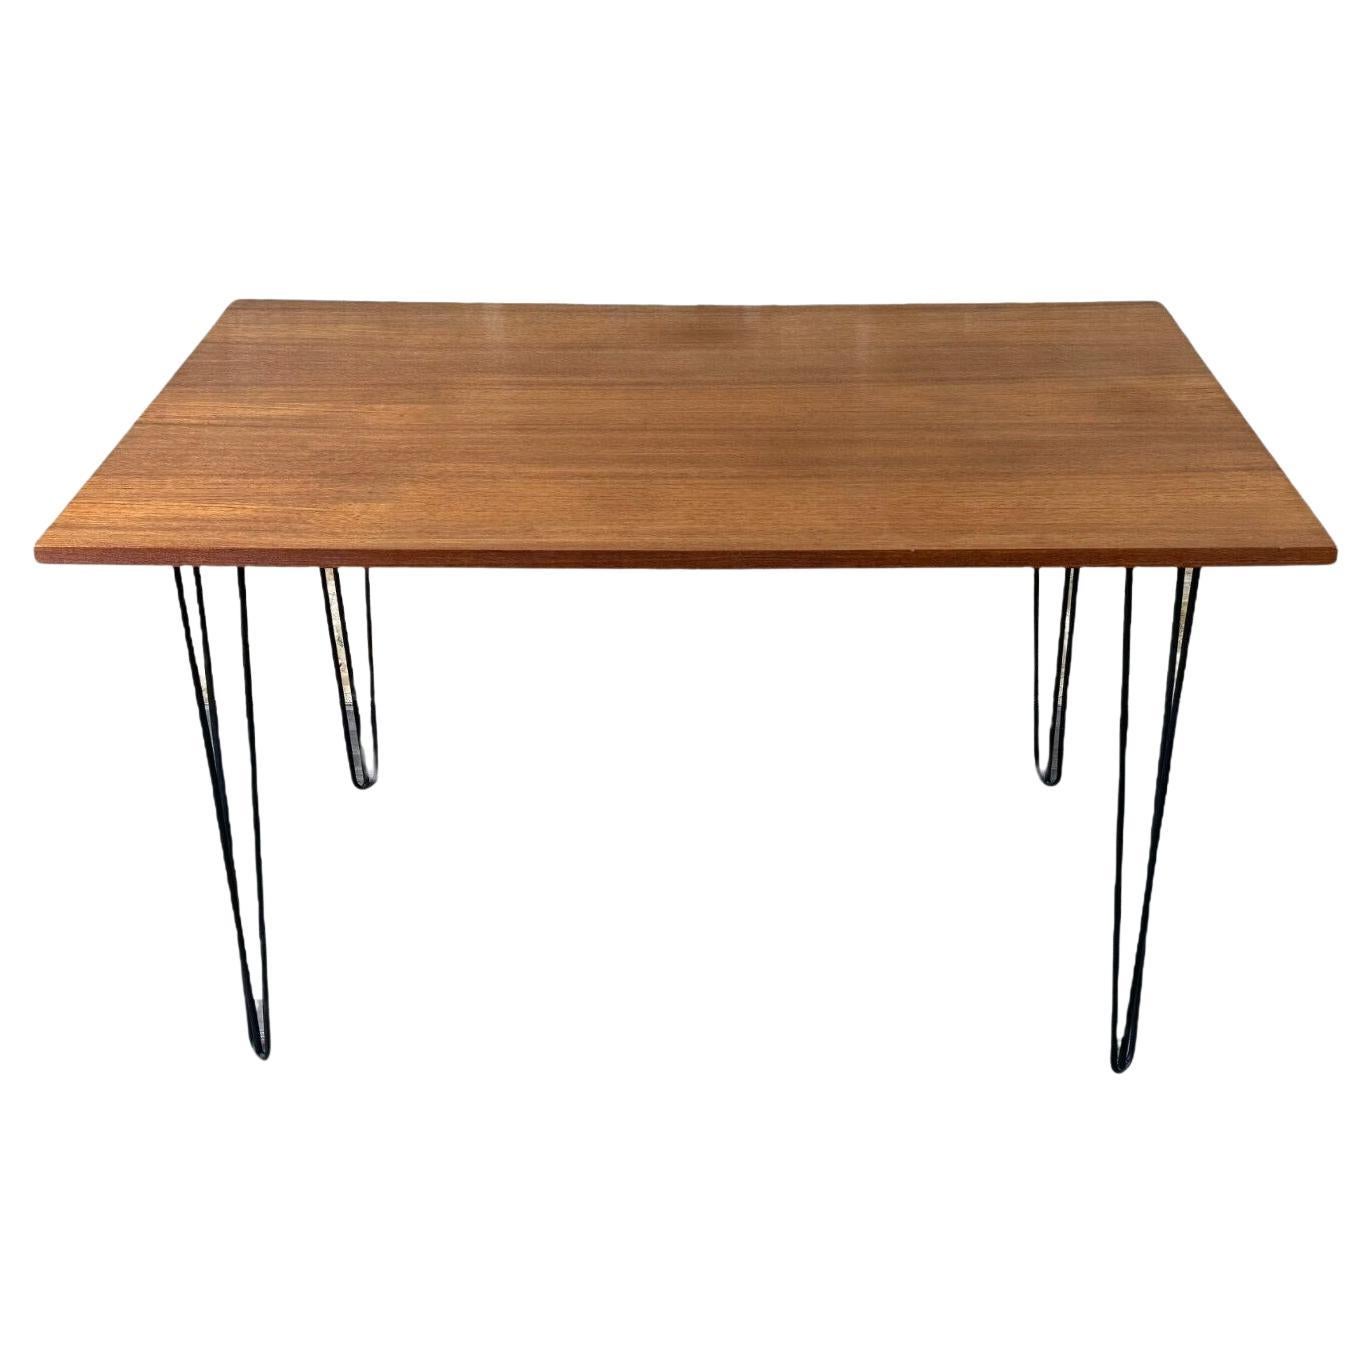 60s 70s Teak & Metal Dining Table Dining Table Danish Modern Design Denmark For Sale